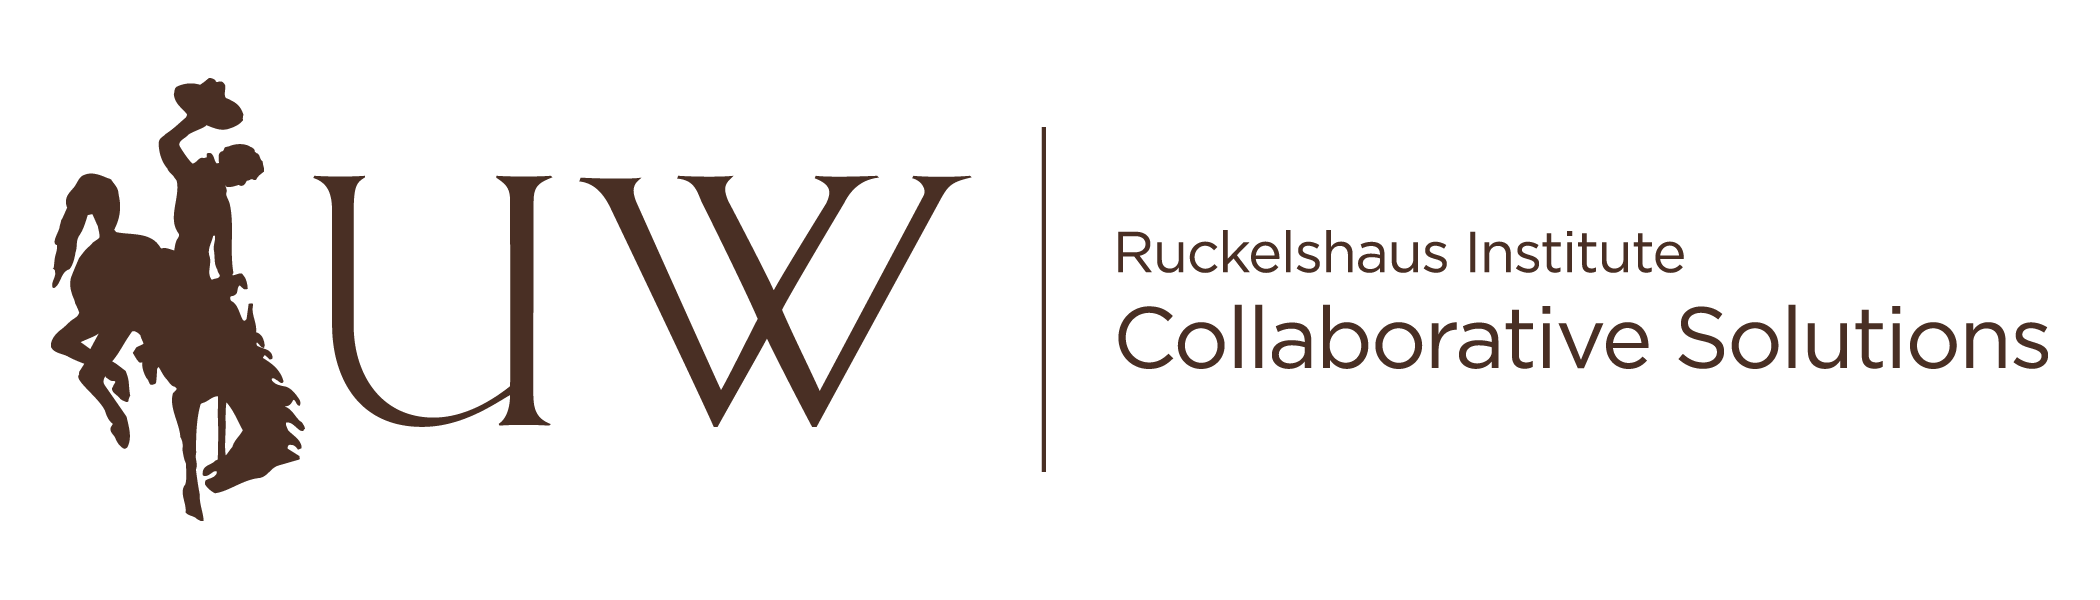 University of Wyoming Ruckelshaus Institute Collaborative Solutions Program logo